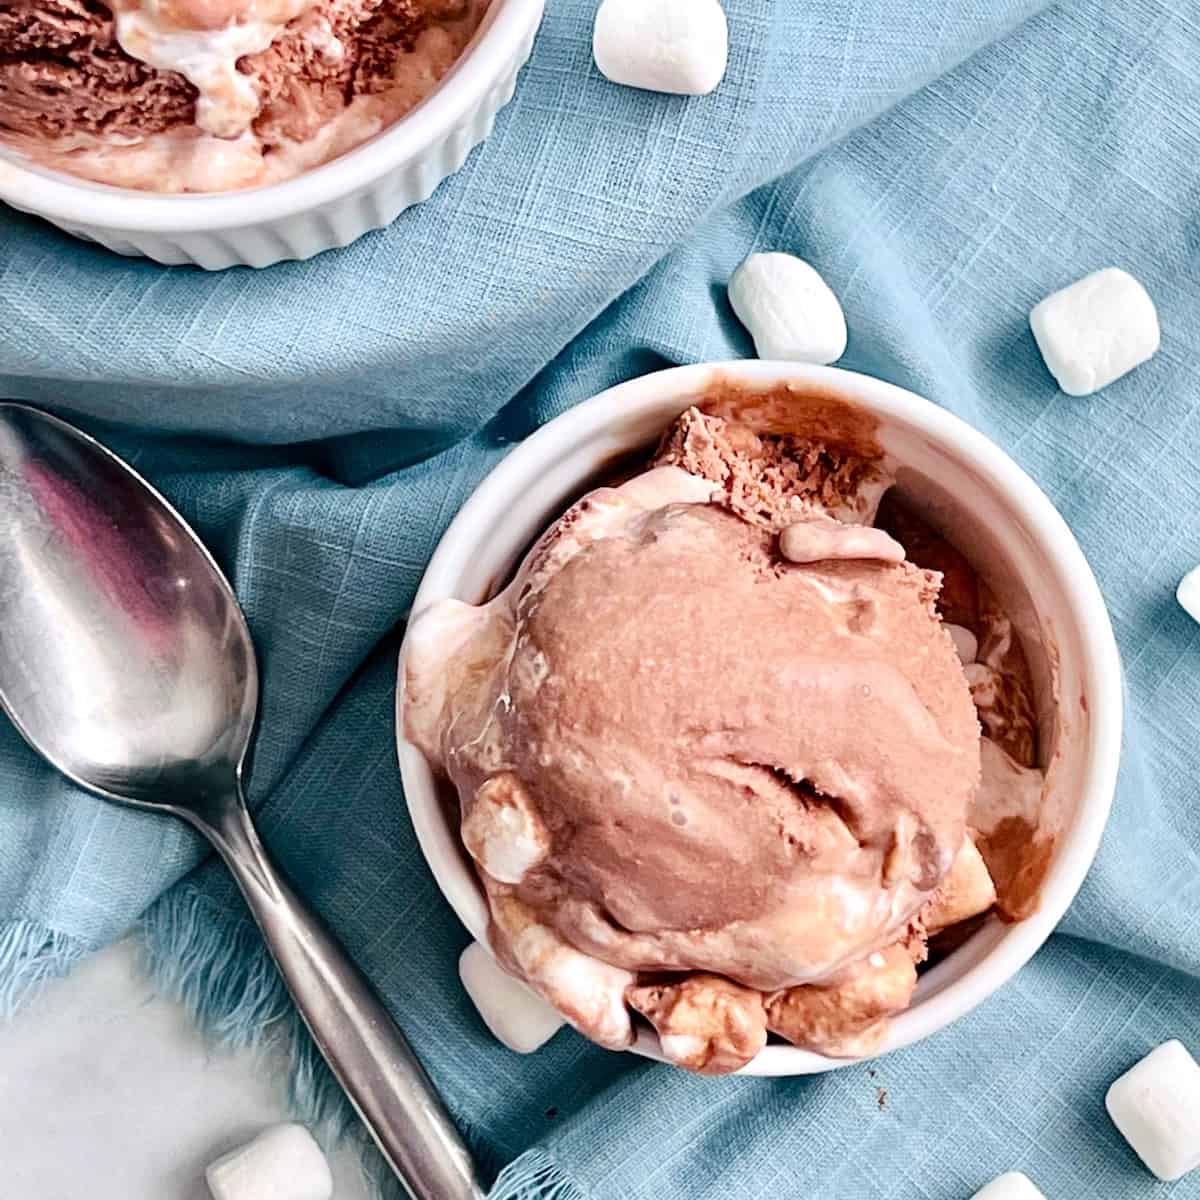 Chocolate ice cream with mini marshmallows in small white ramekins.